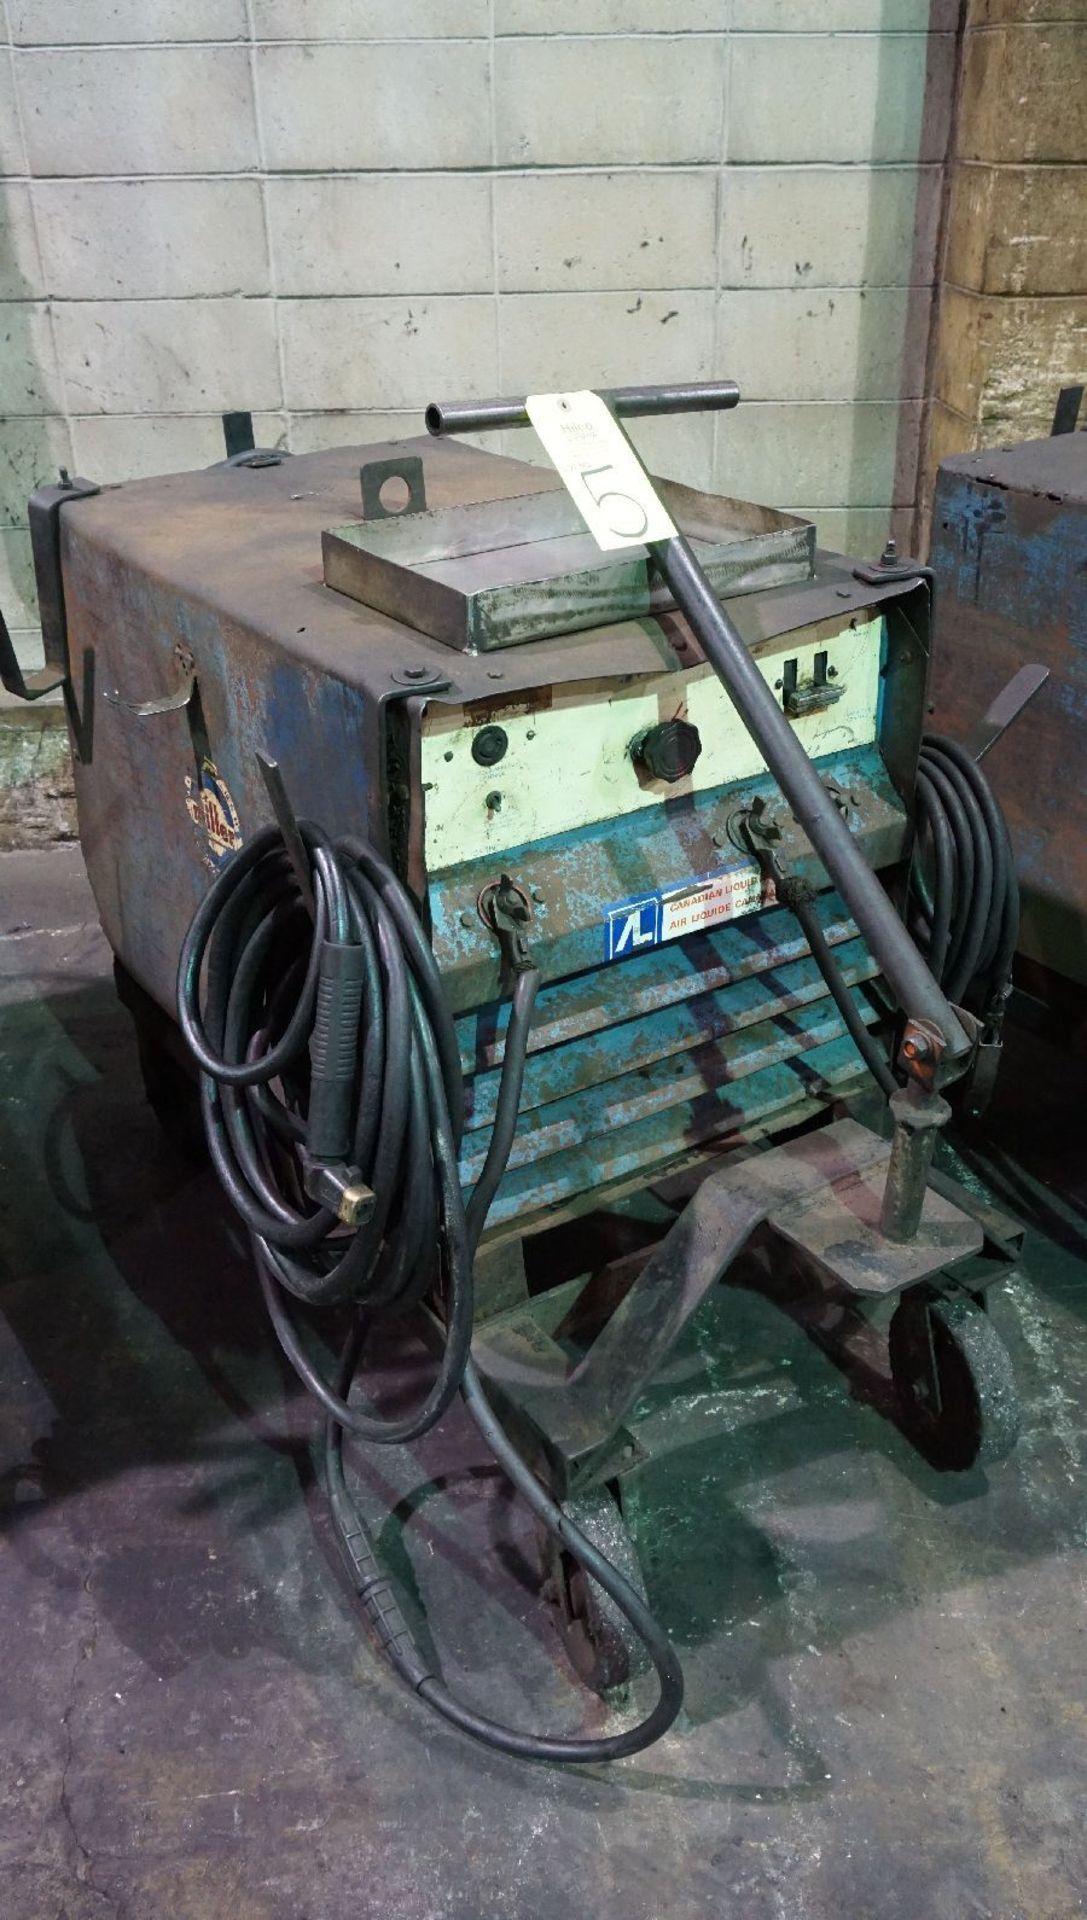 Miller Model SRH-444 Arc welding Power Source Welder